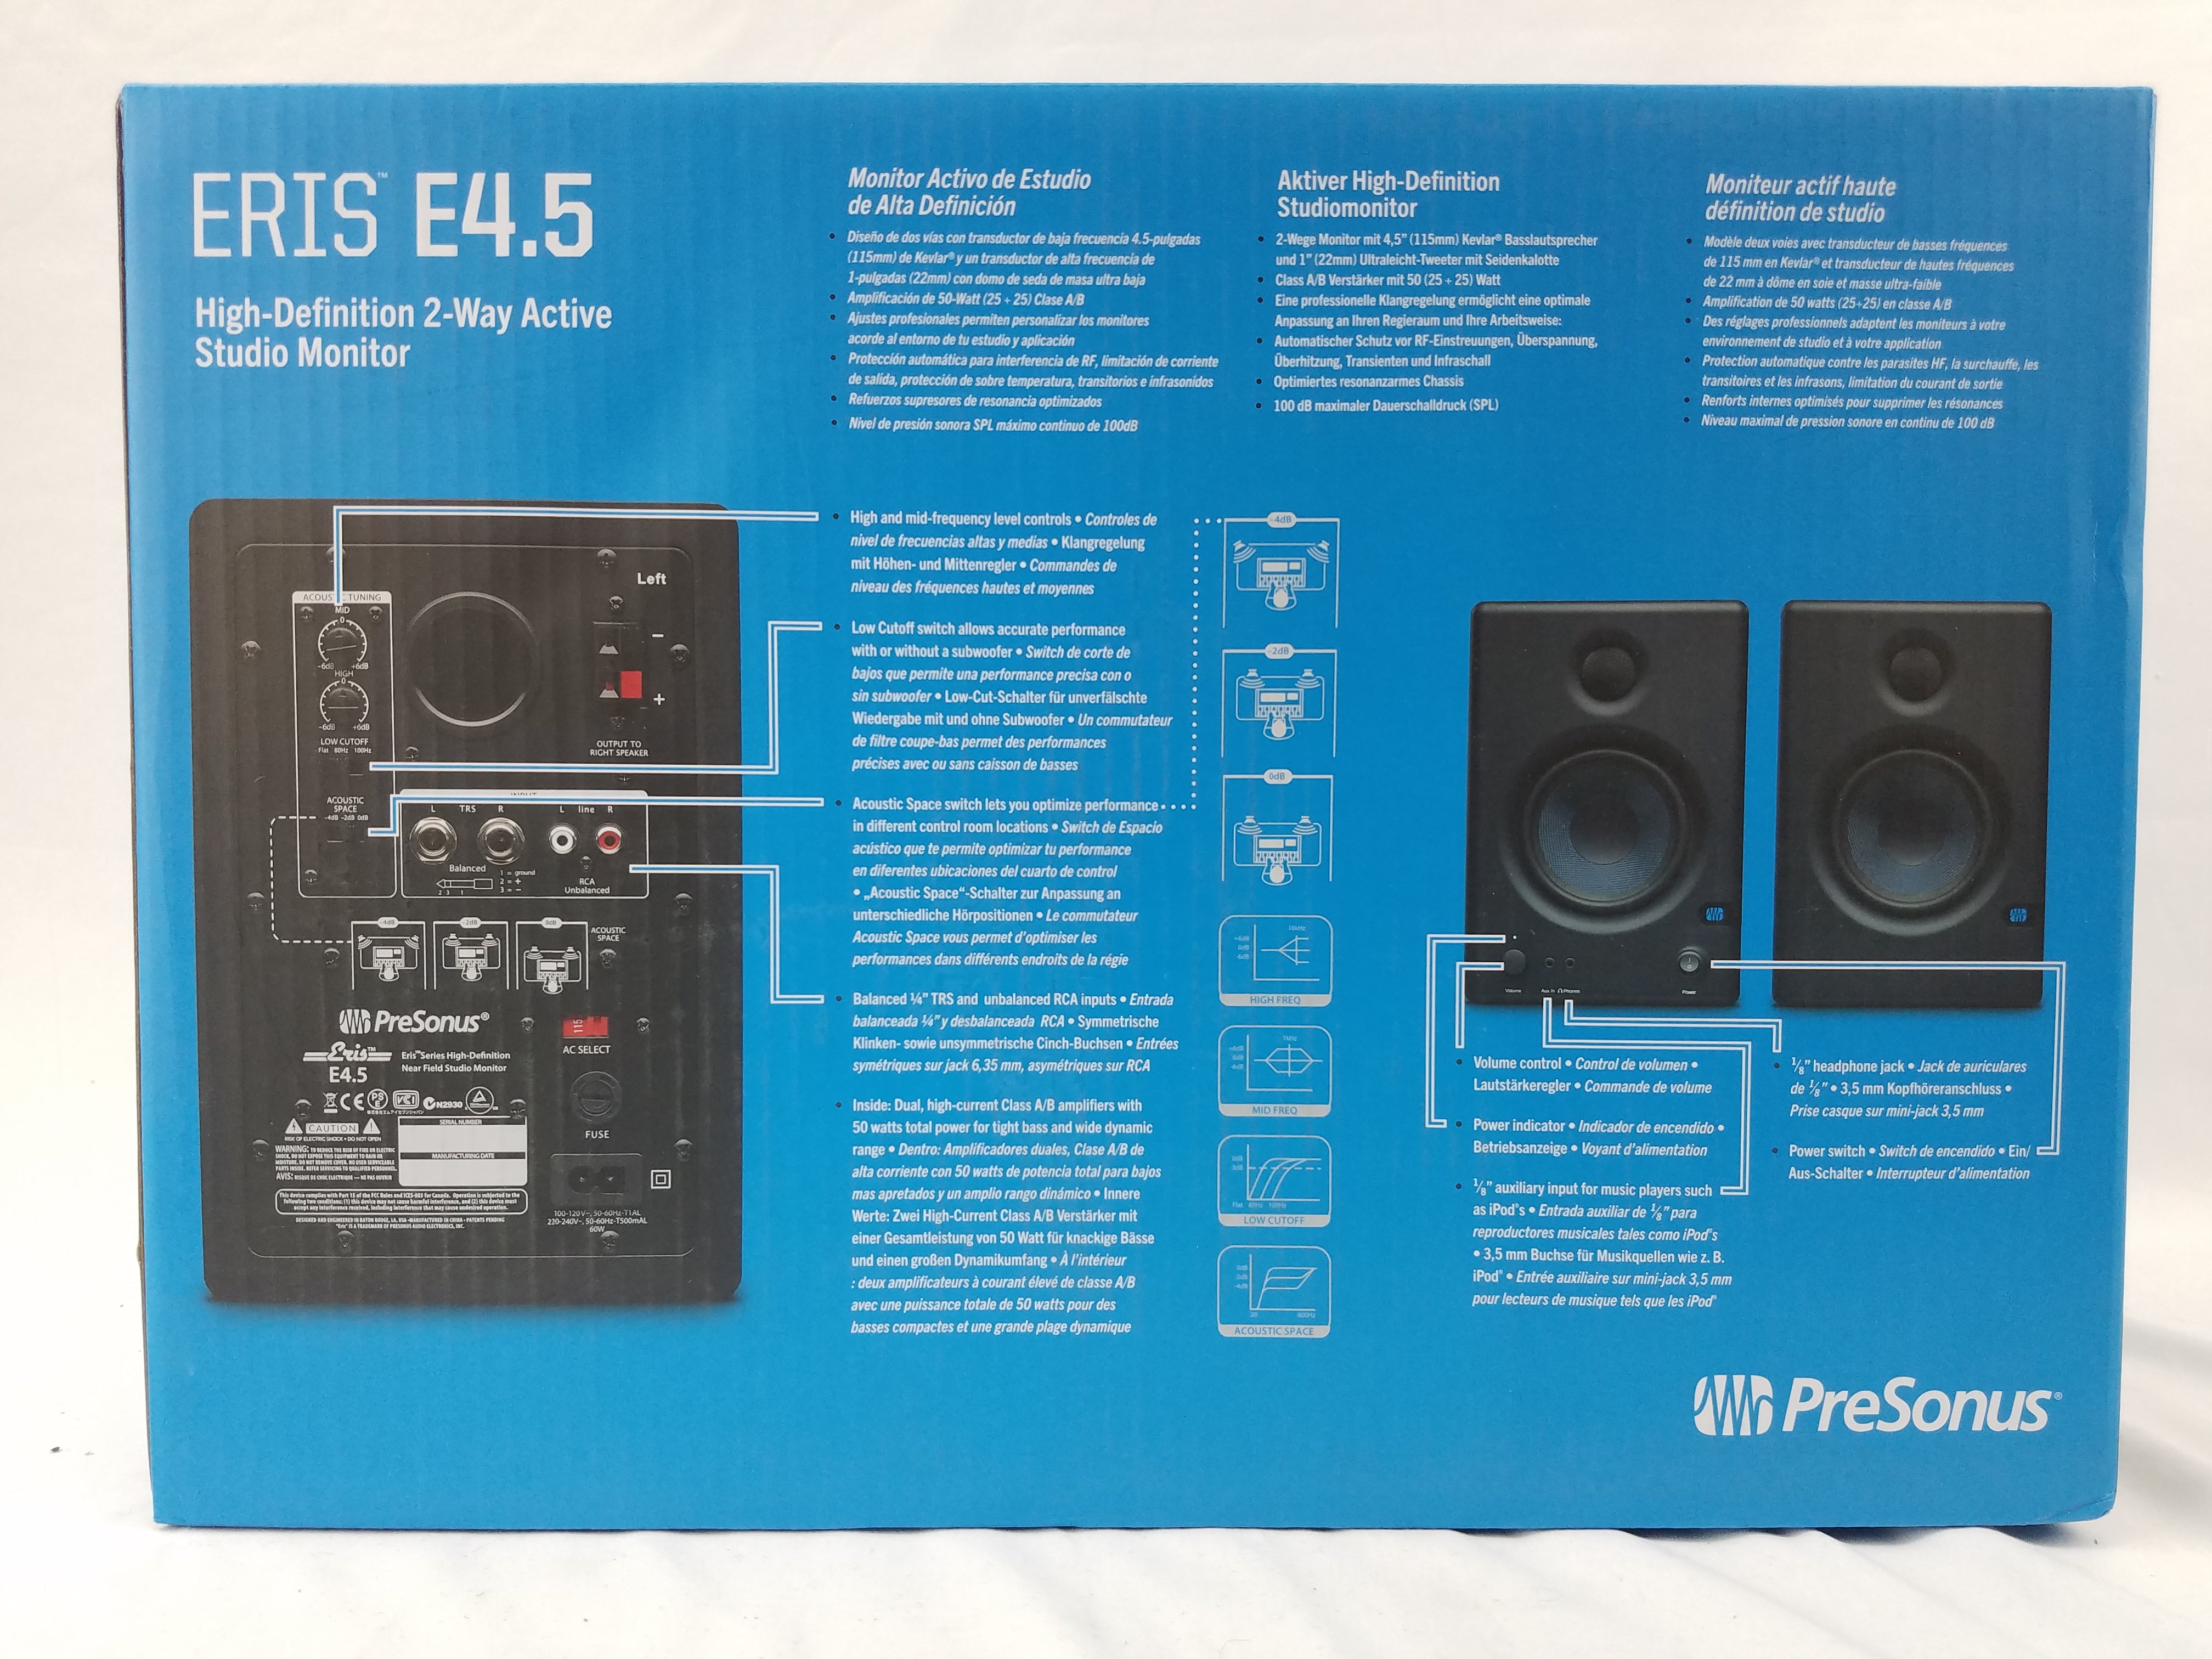 ERIS E4.5 Powered Studio Monitors (Pair)